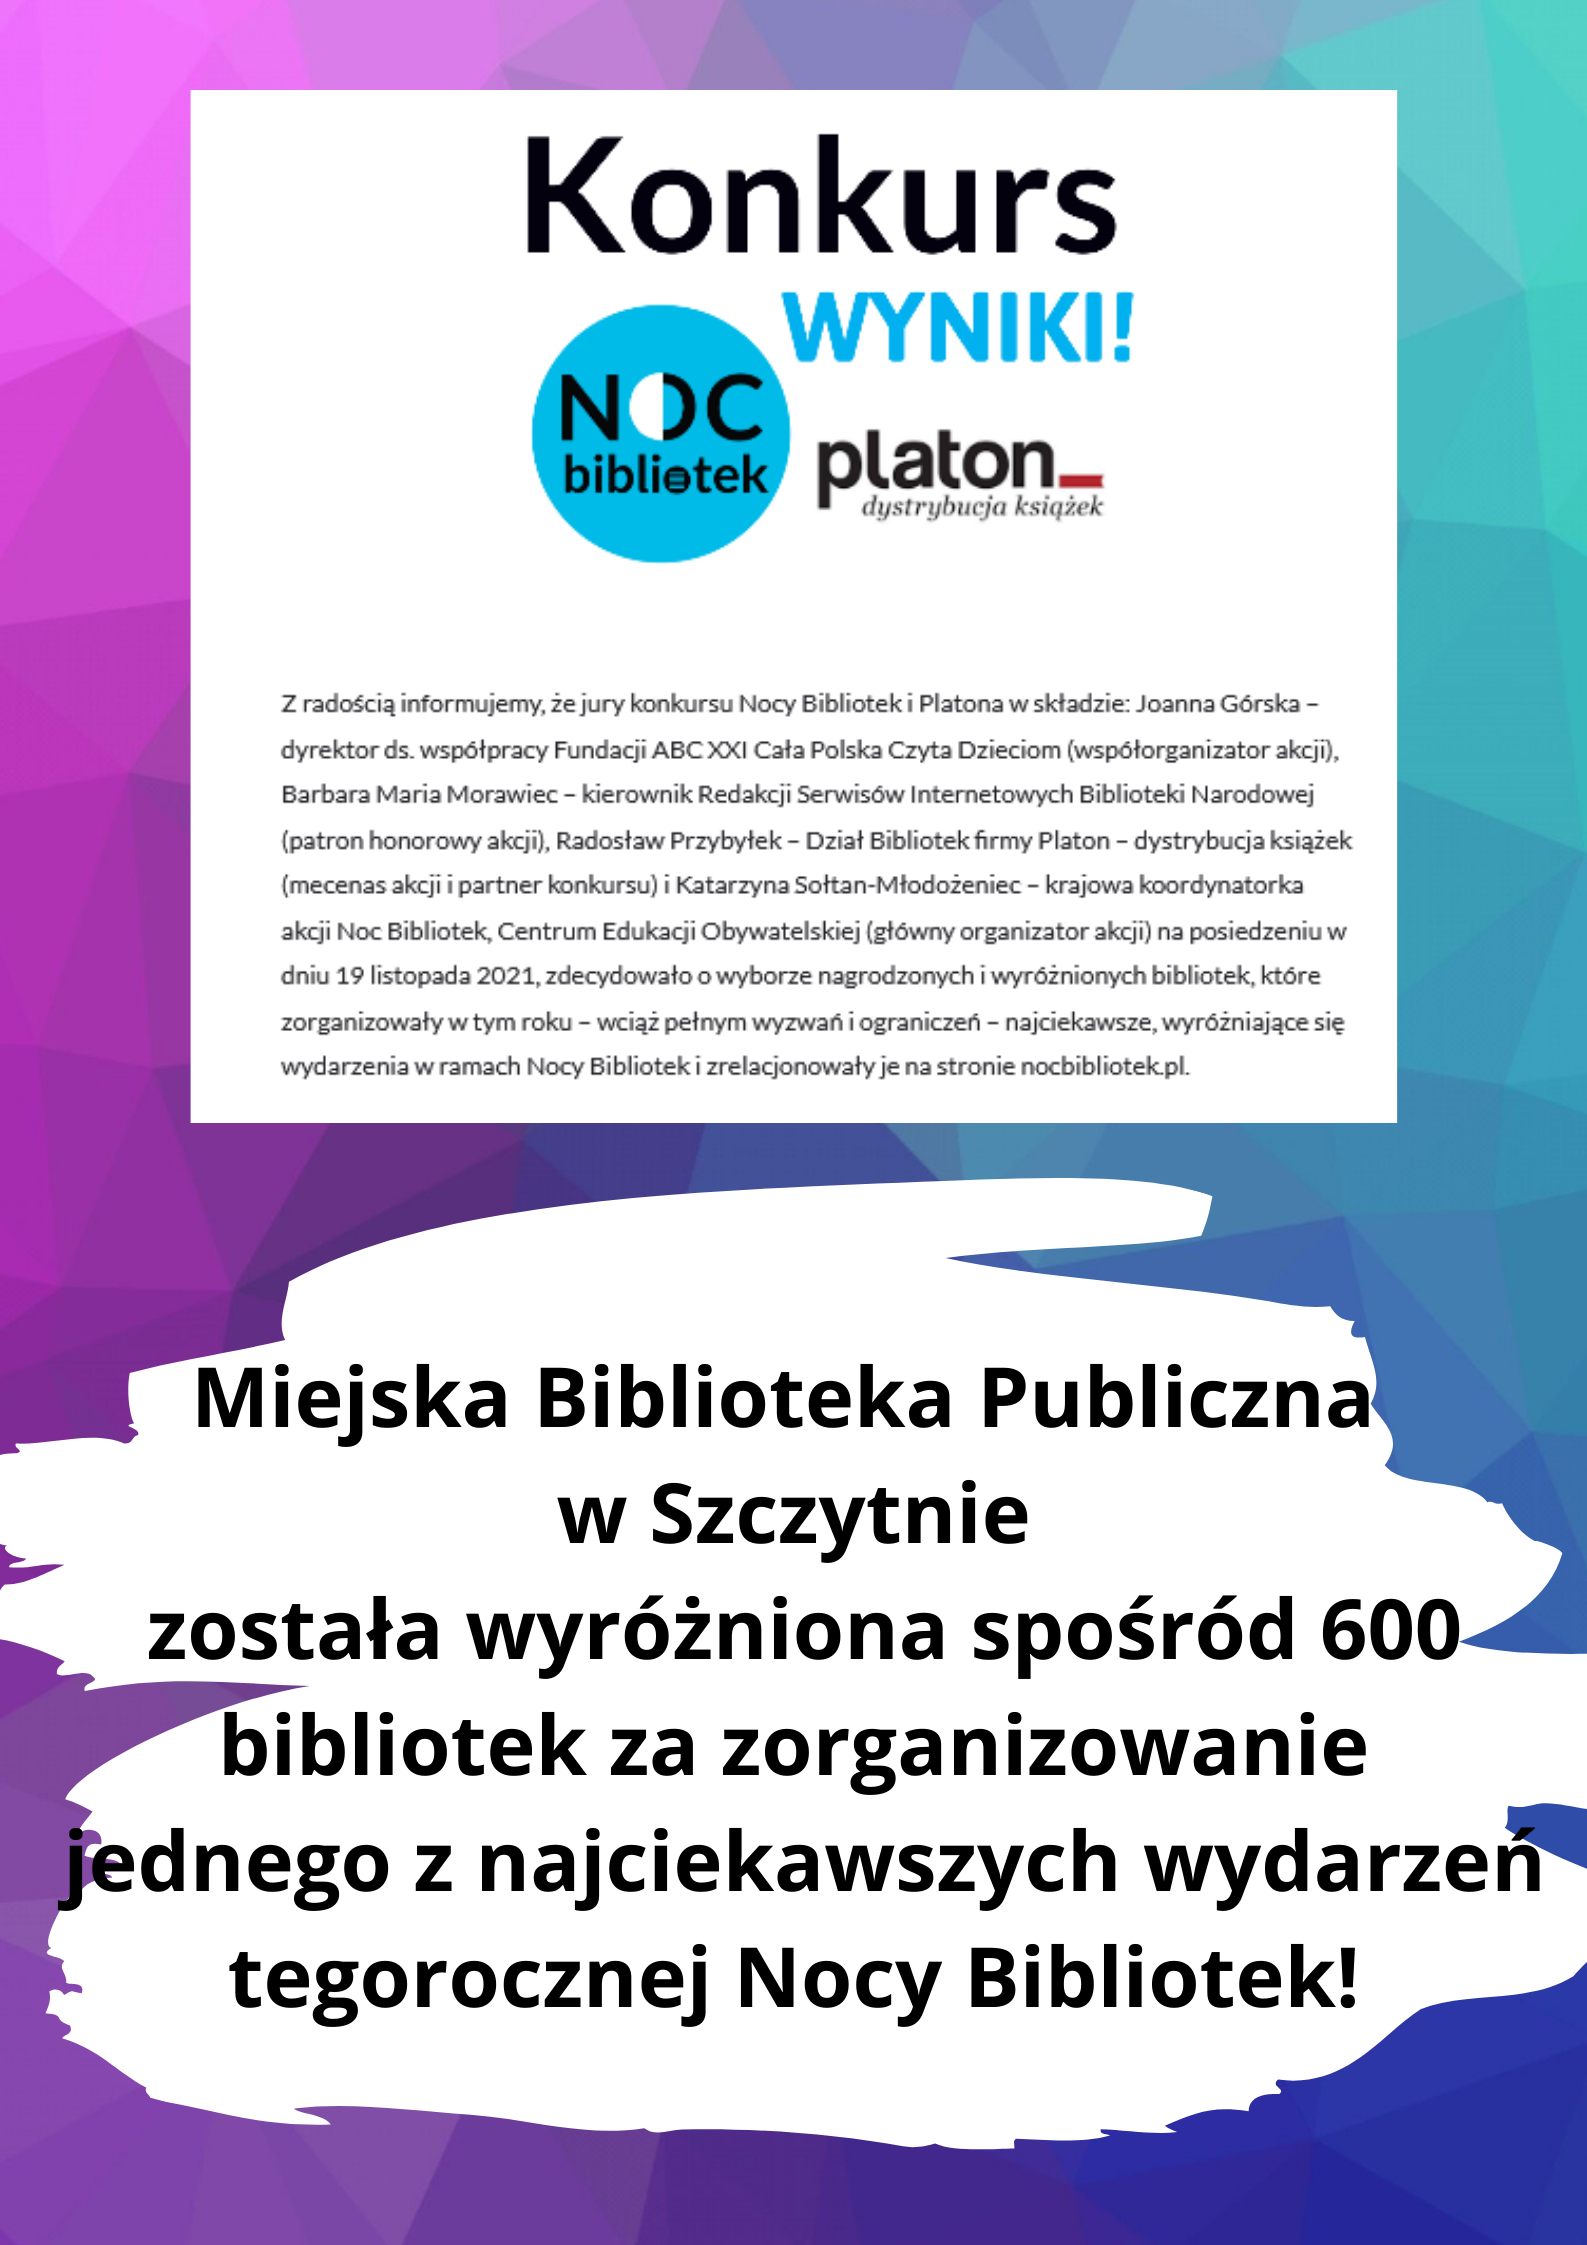 https://m.powiatszczycienski.pl/2021/11/orig/konkurs-noc-bibliotek-45600.png